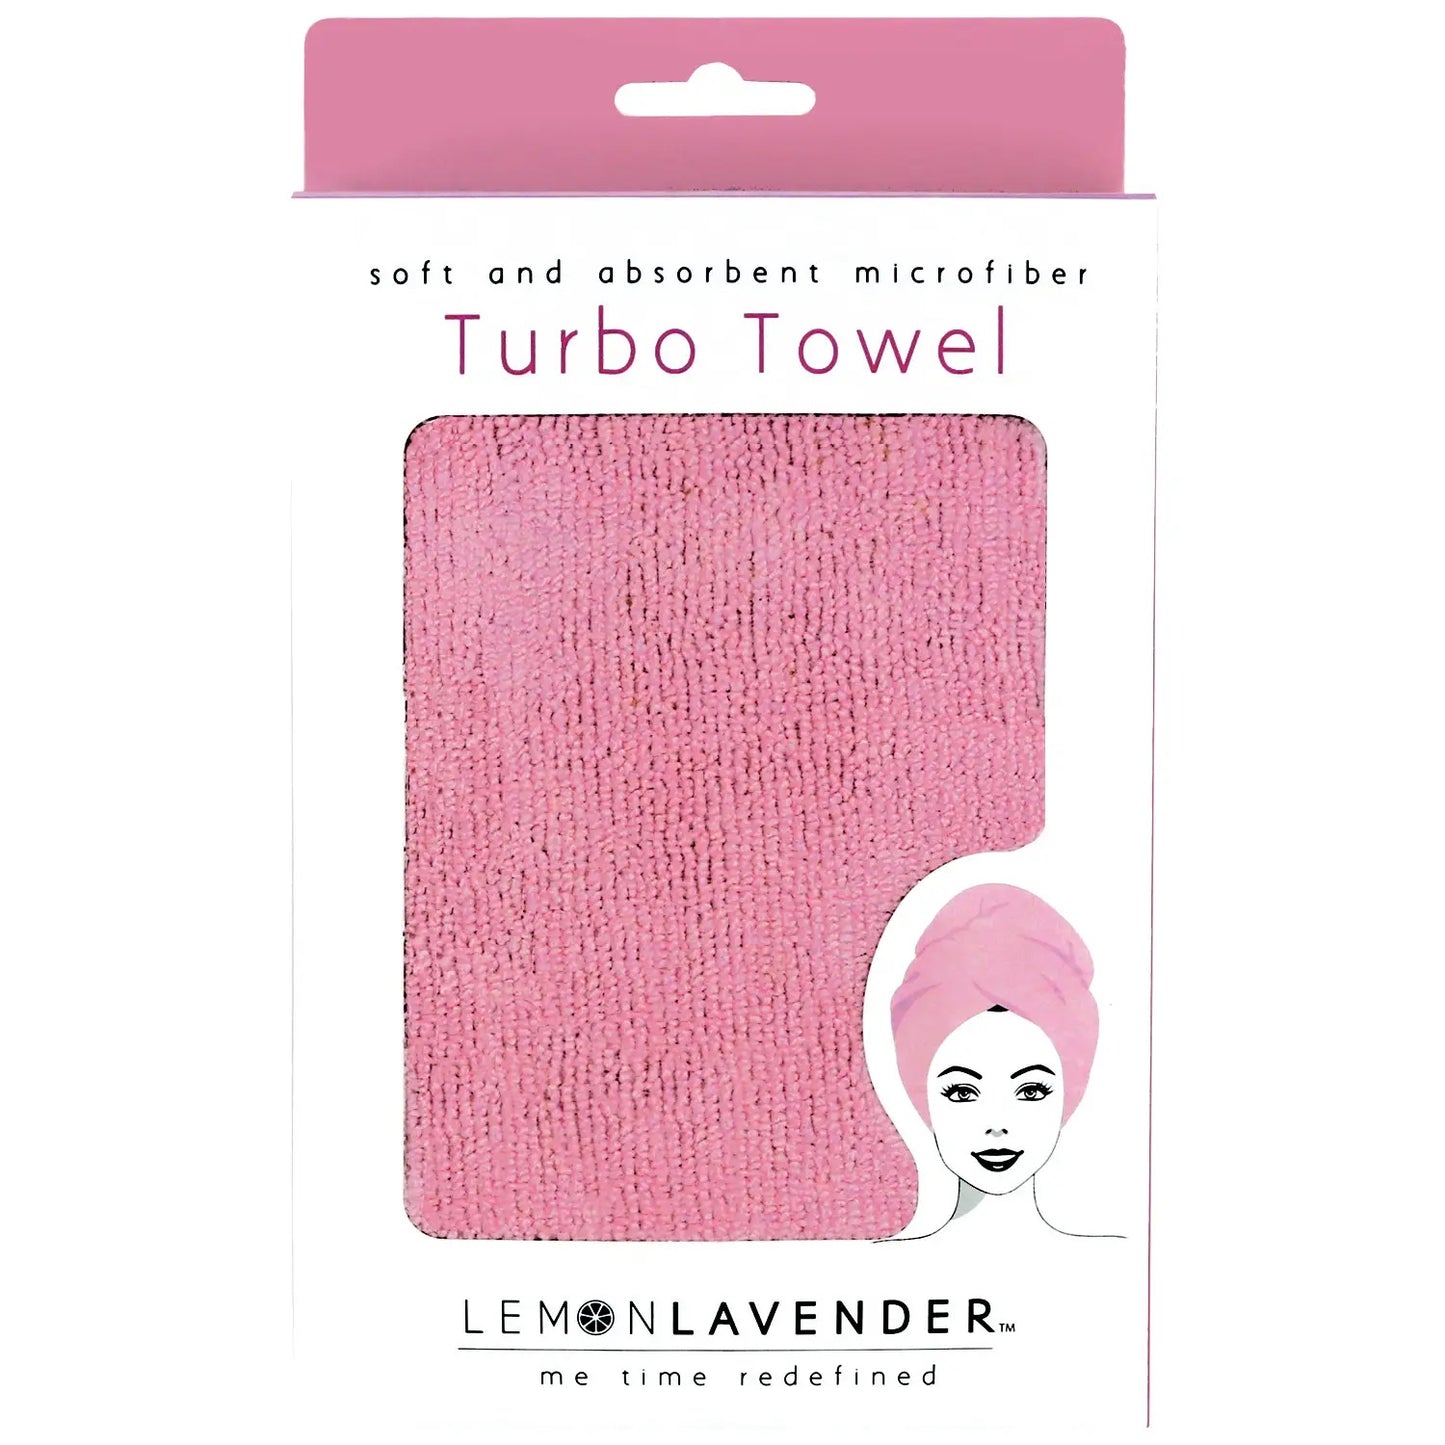 Body- Lemon Lavender Turbo Towel